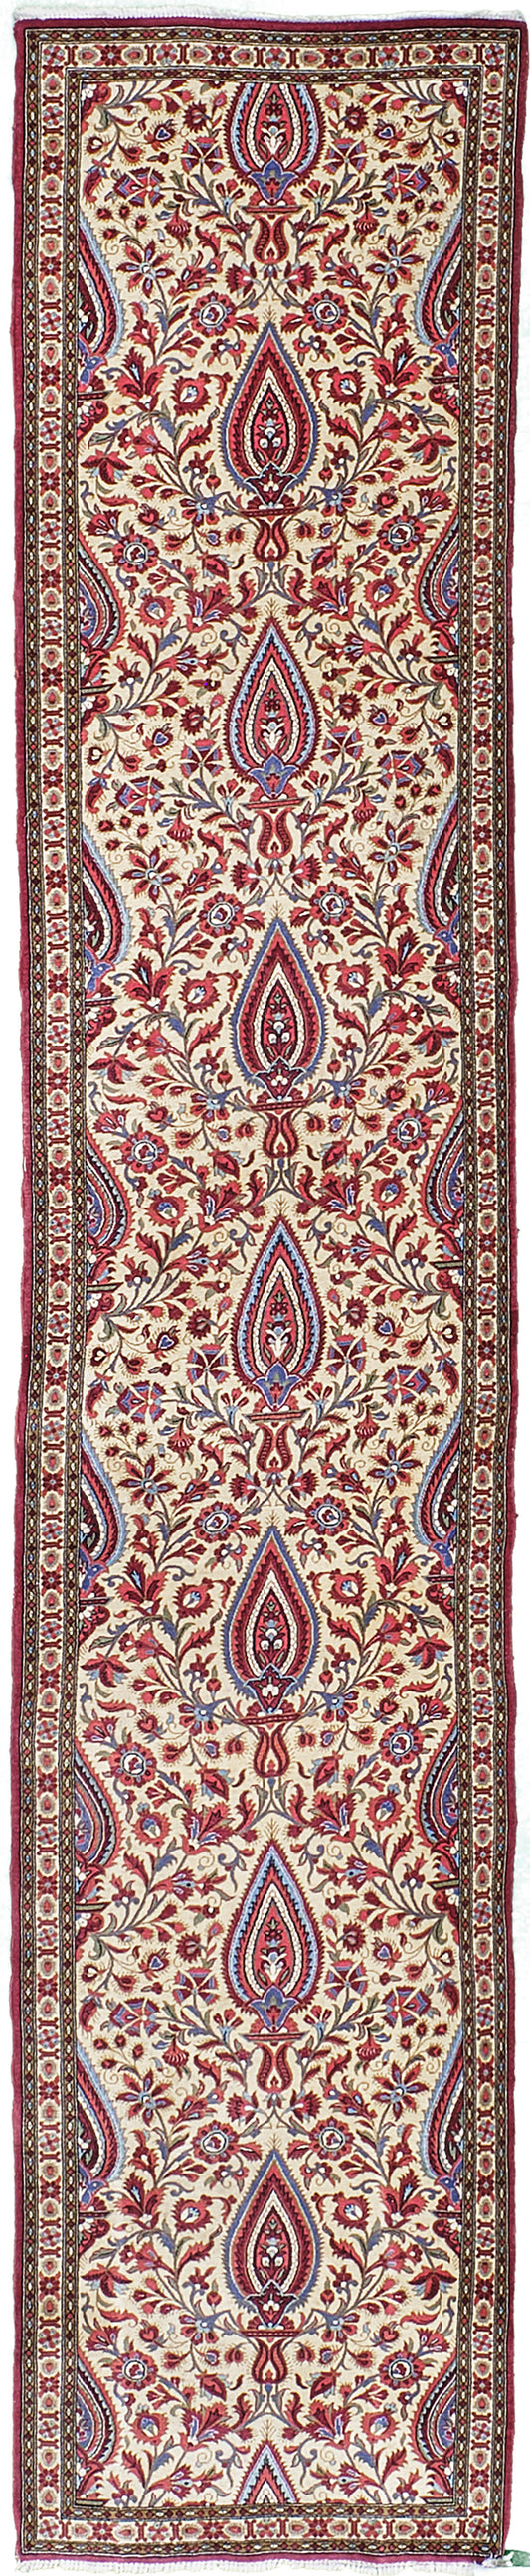 Persian Rug 4065 Vintage Persian Qum 30193